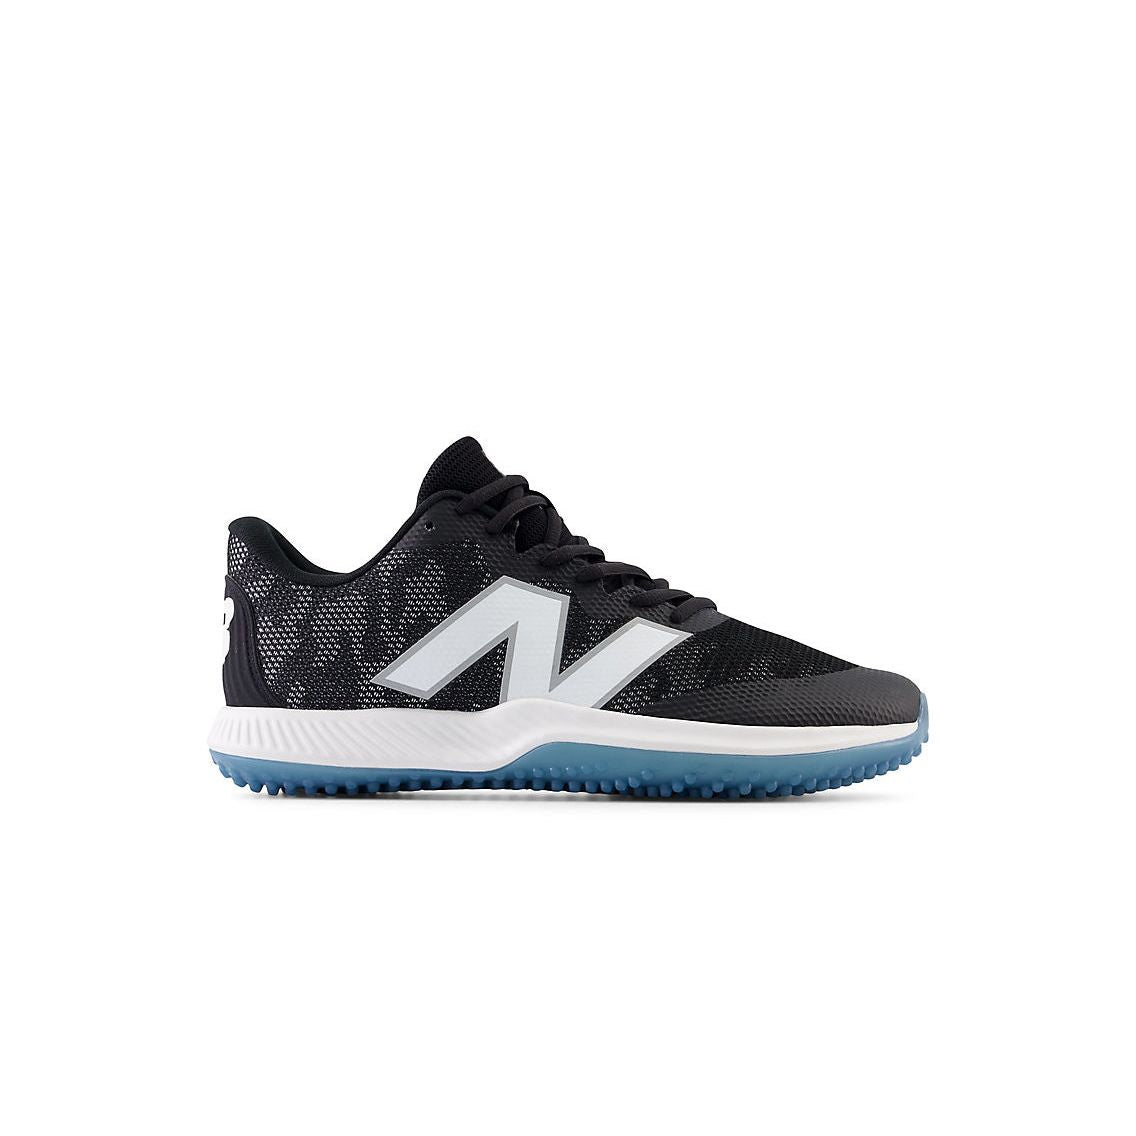 New Balance Men's FuelCell 4040 V7 Turf Baseball Shoes - Black / Optic White / Ice Blue - T4040BK7